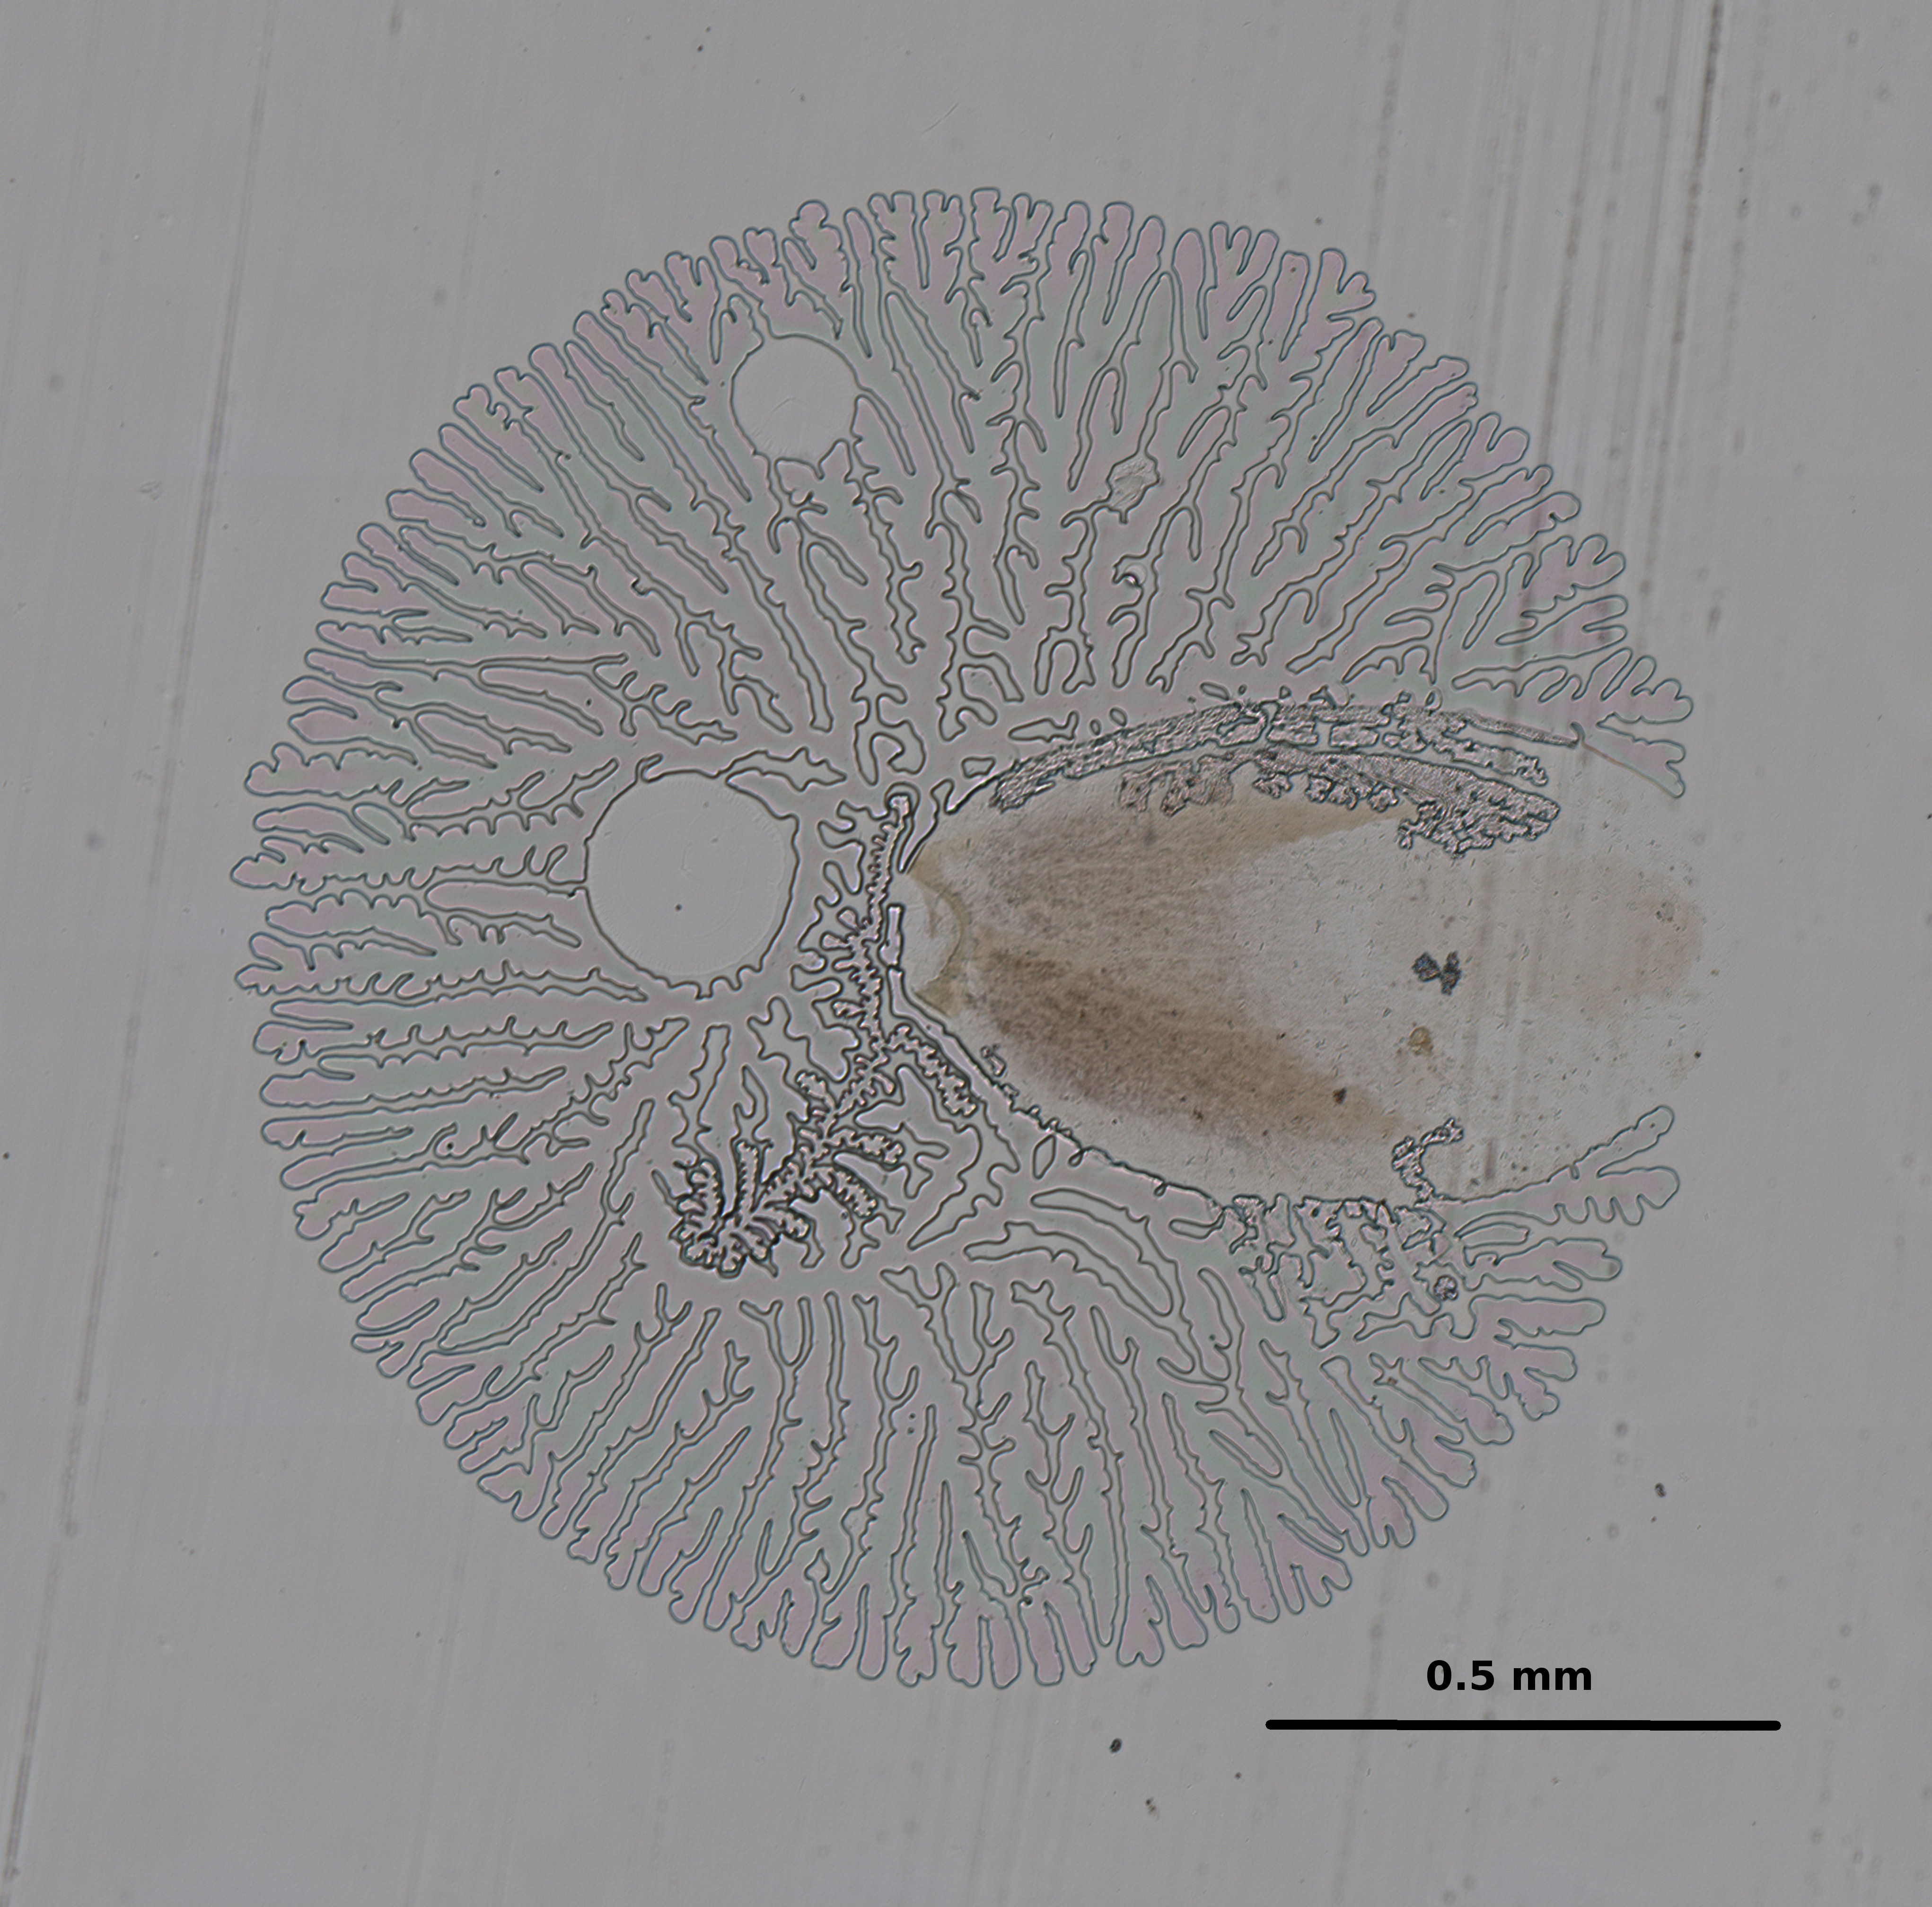 Ephemerythus (Tricomerella) straeleni s5 gill 1 10x.JPG